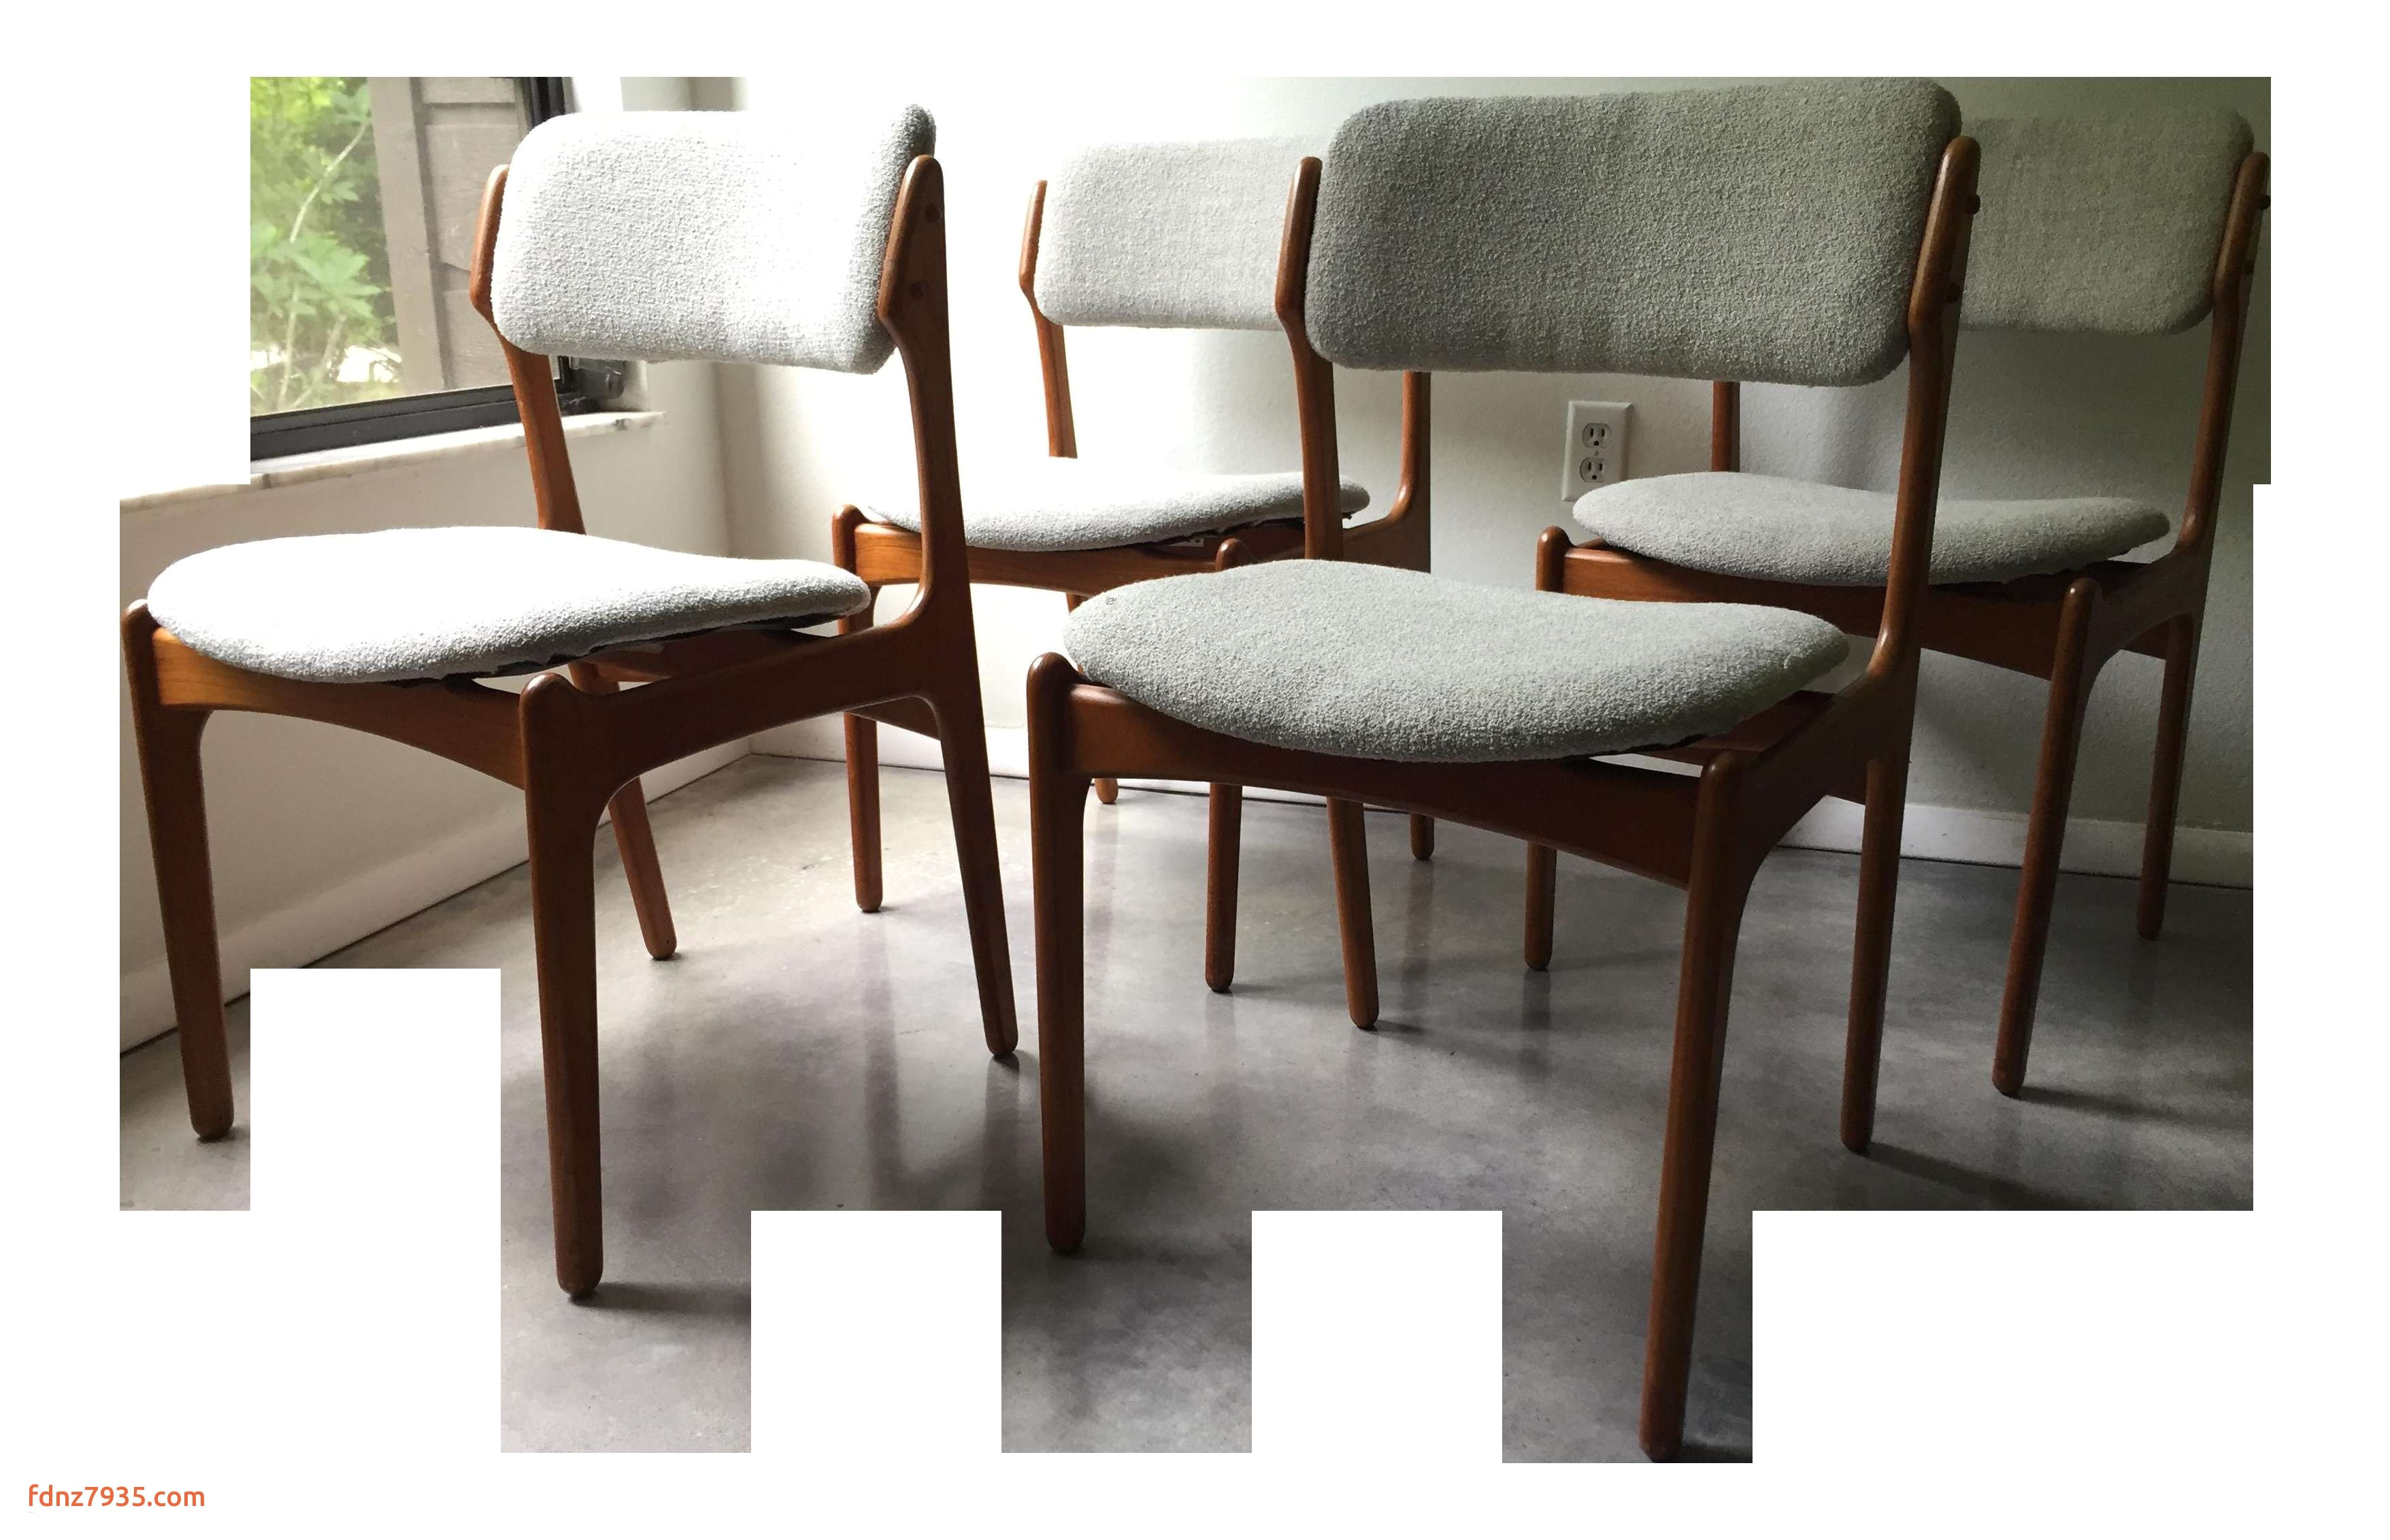 brown jordan outdoor furniture awesome vintage erik buck o d mobler danish dining chairs set 4 ideas